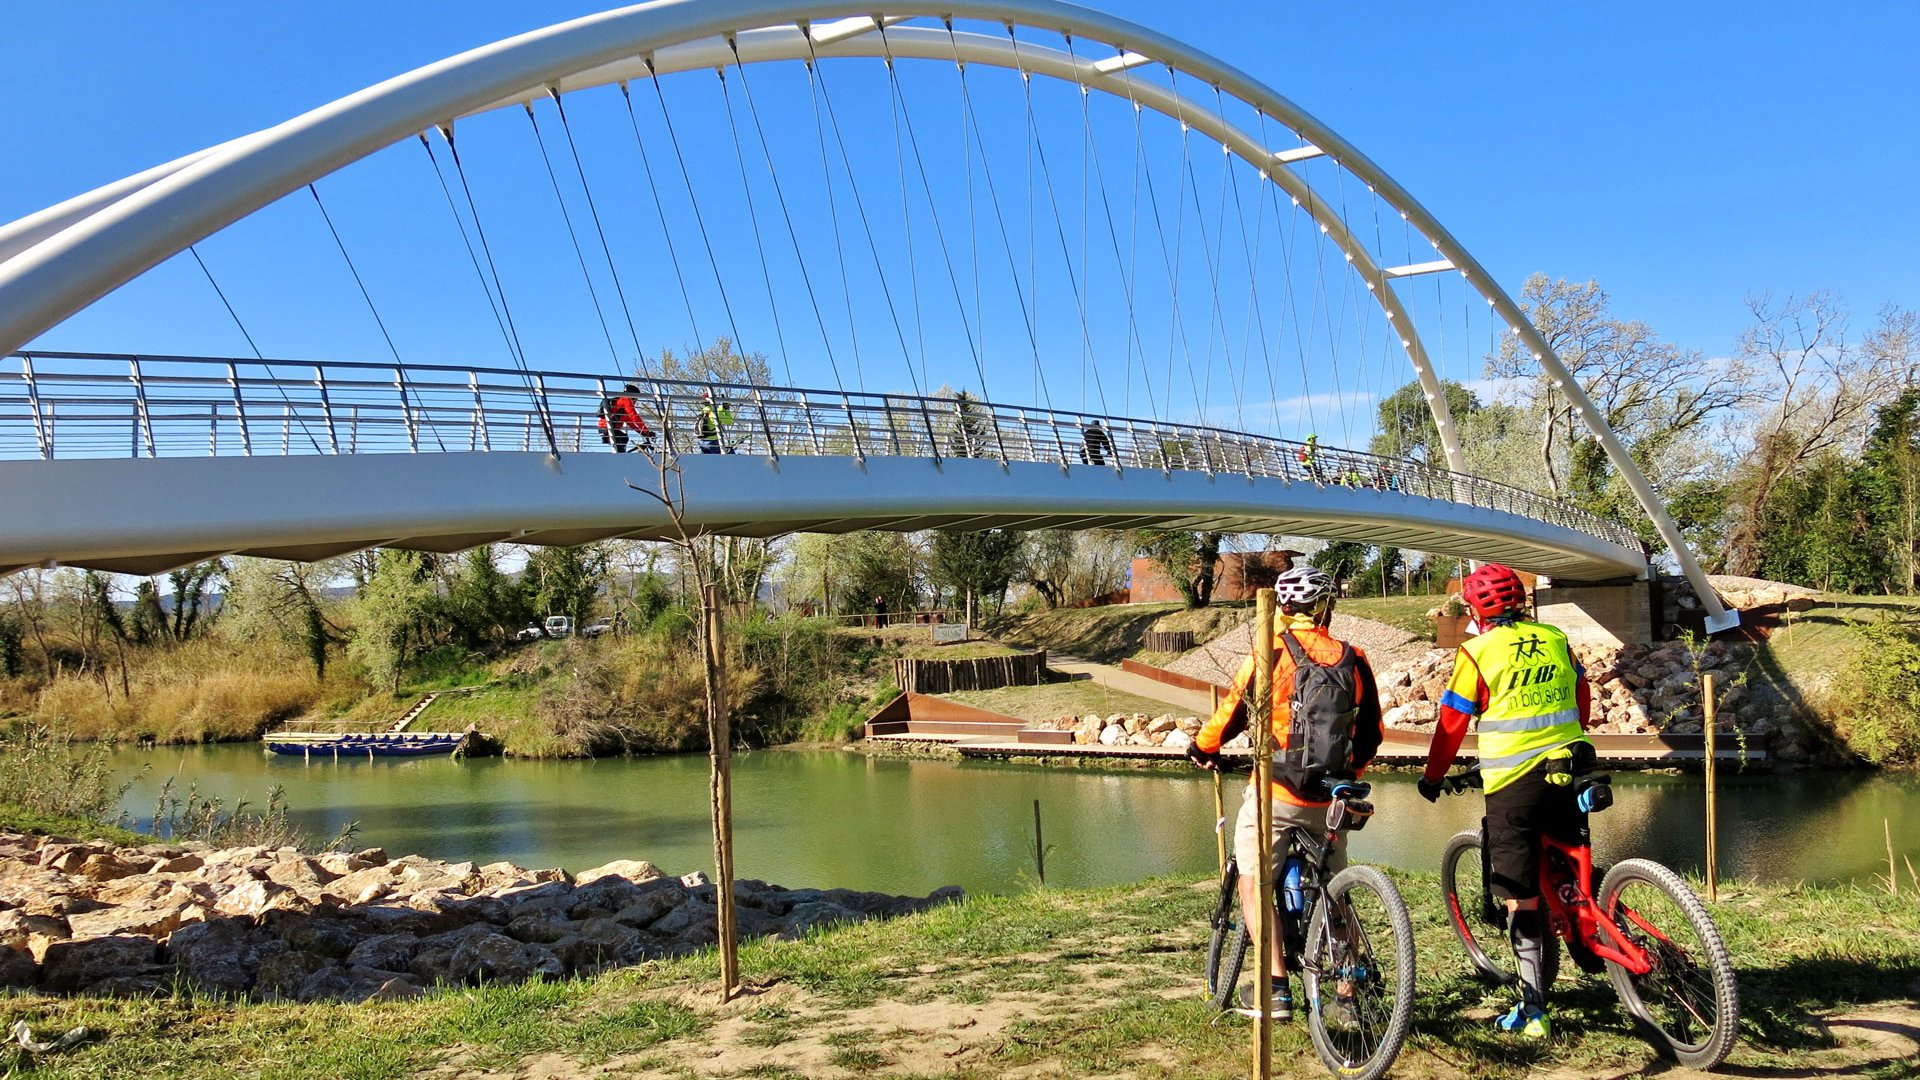 Cycle-pedestrian Bridge Ombrone River